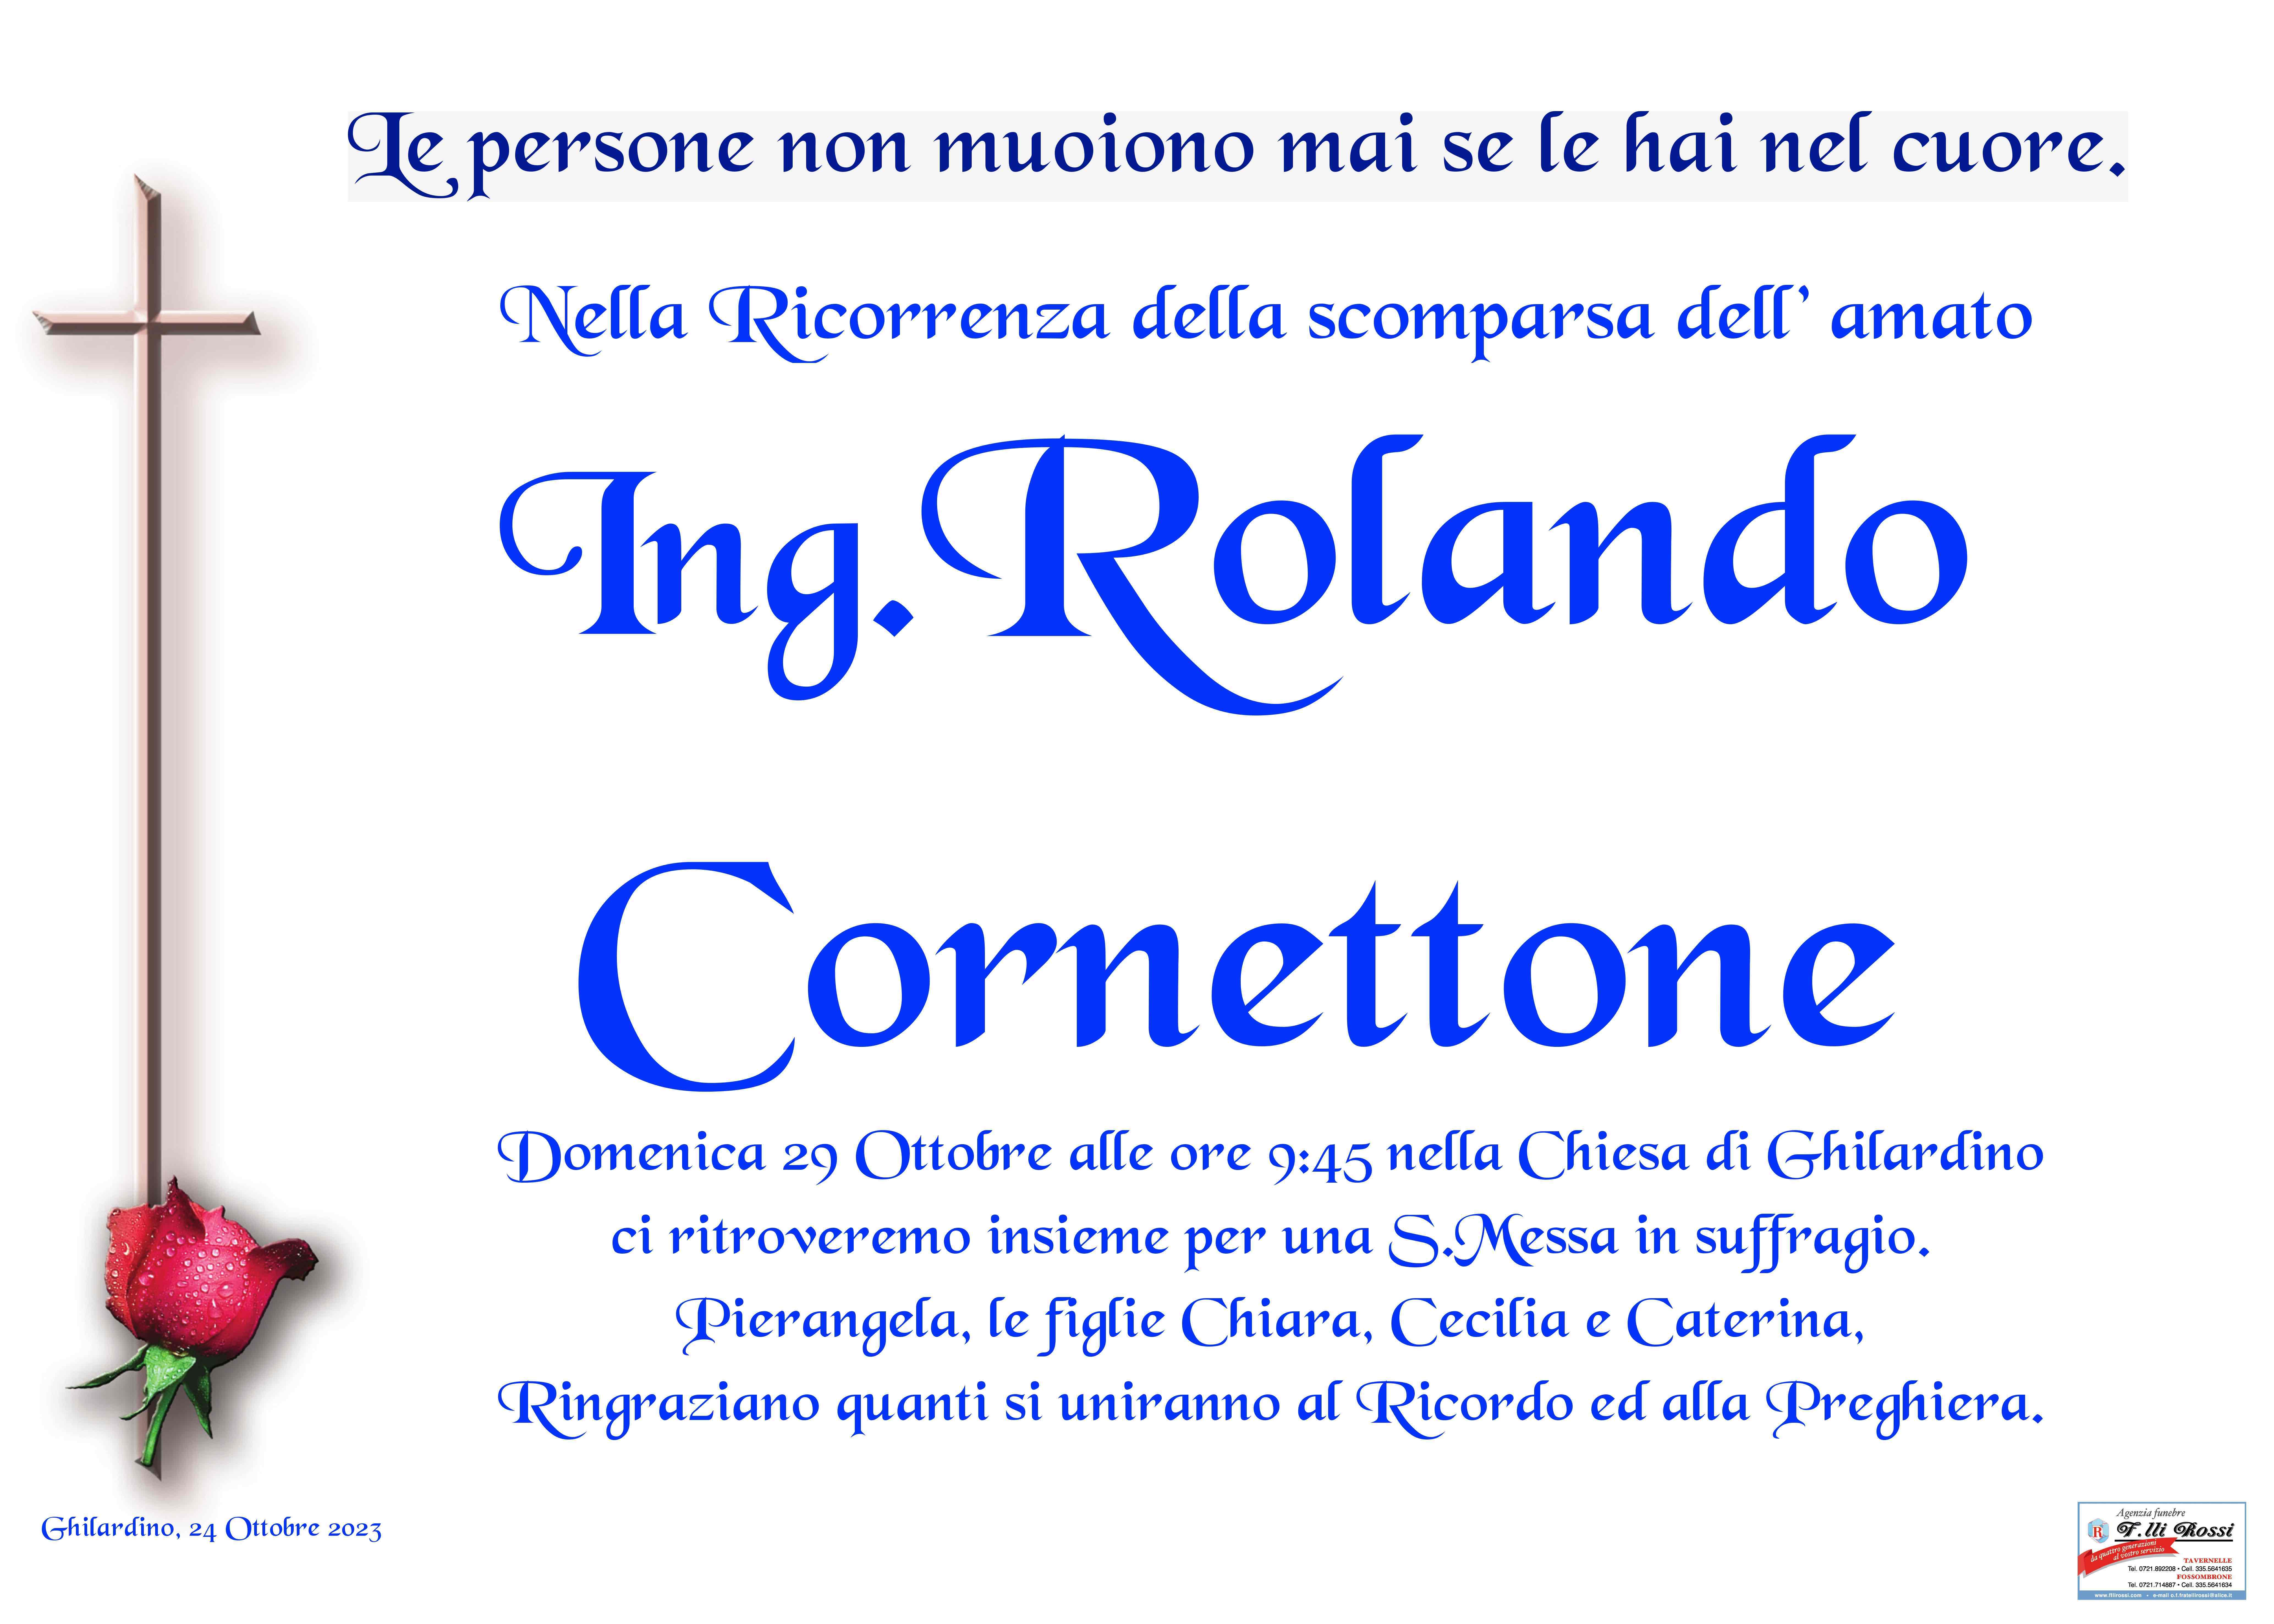 Rolando Cornettone